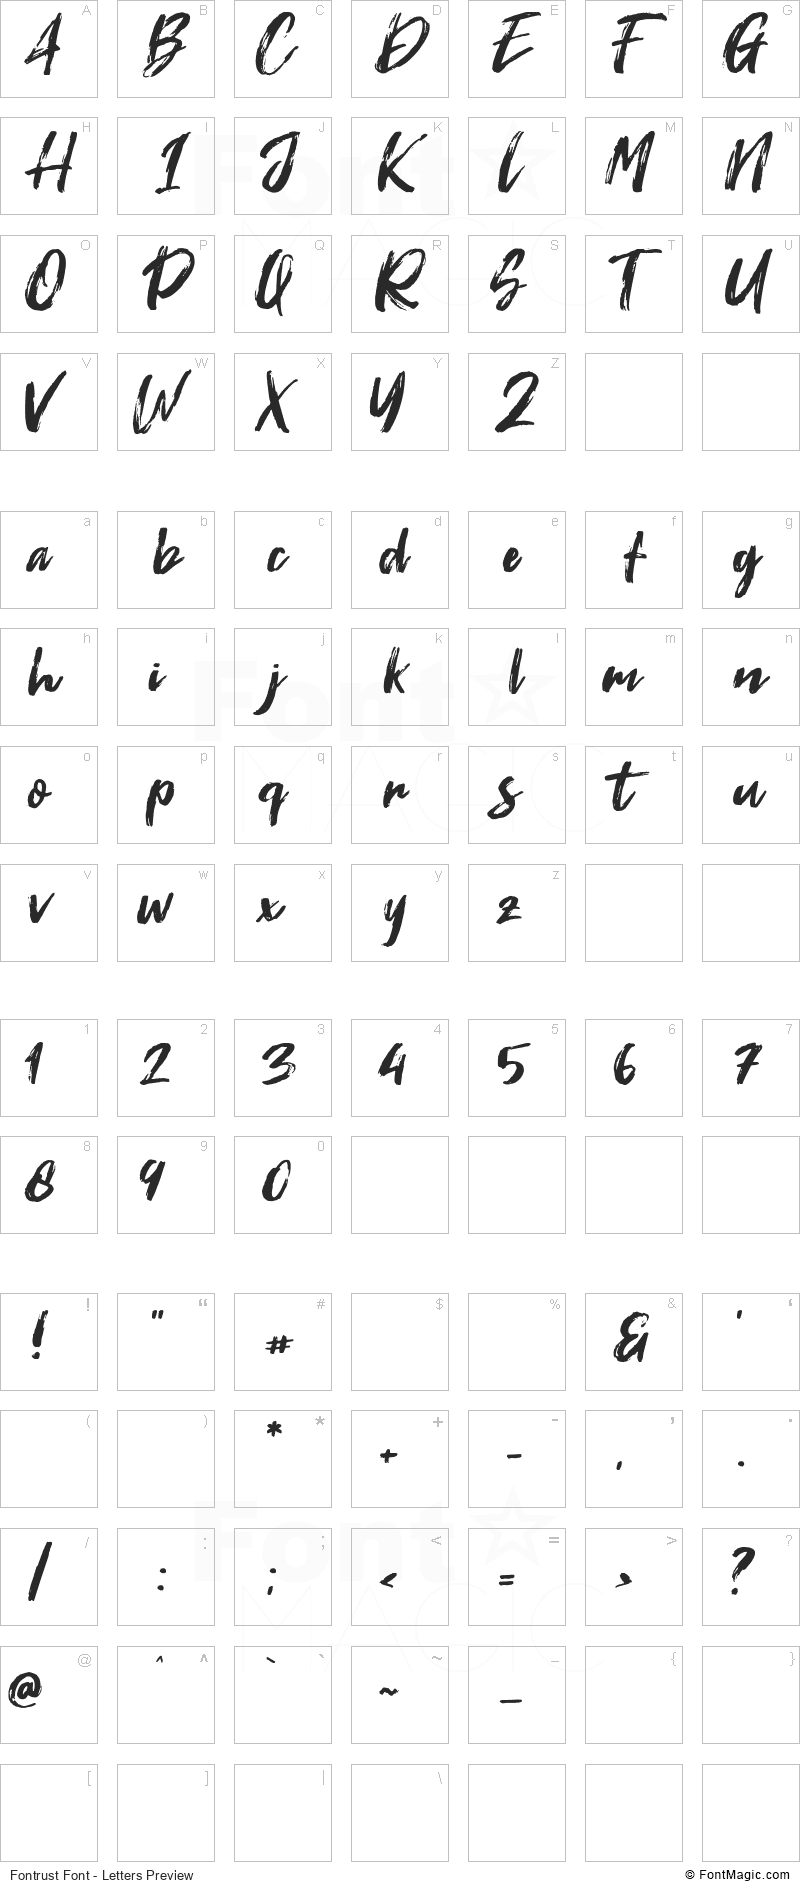 Fontrust Font - All Latters Preview Chart